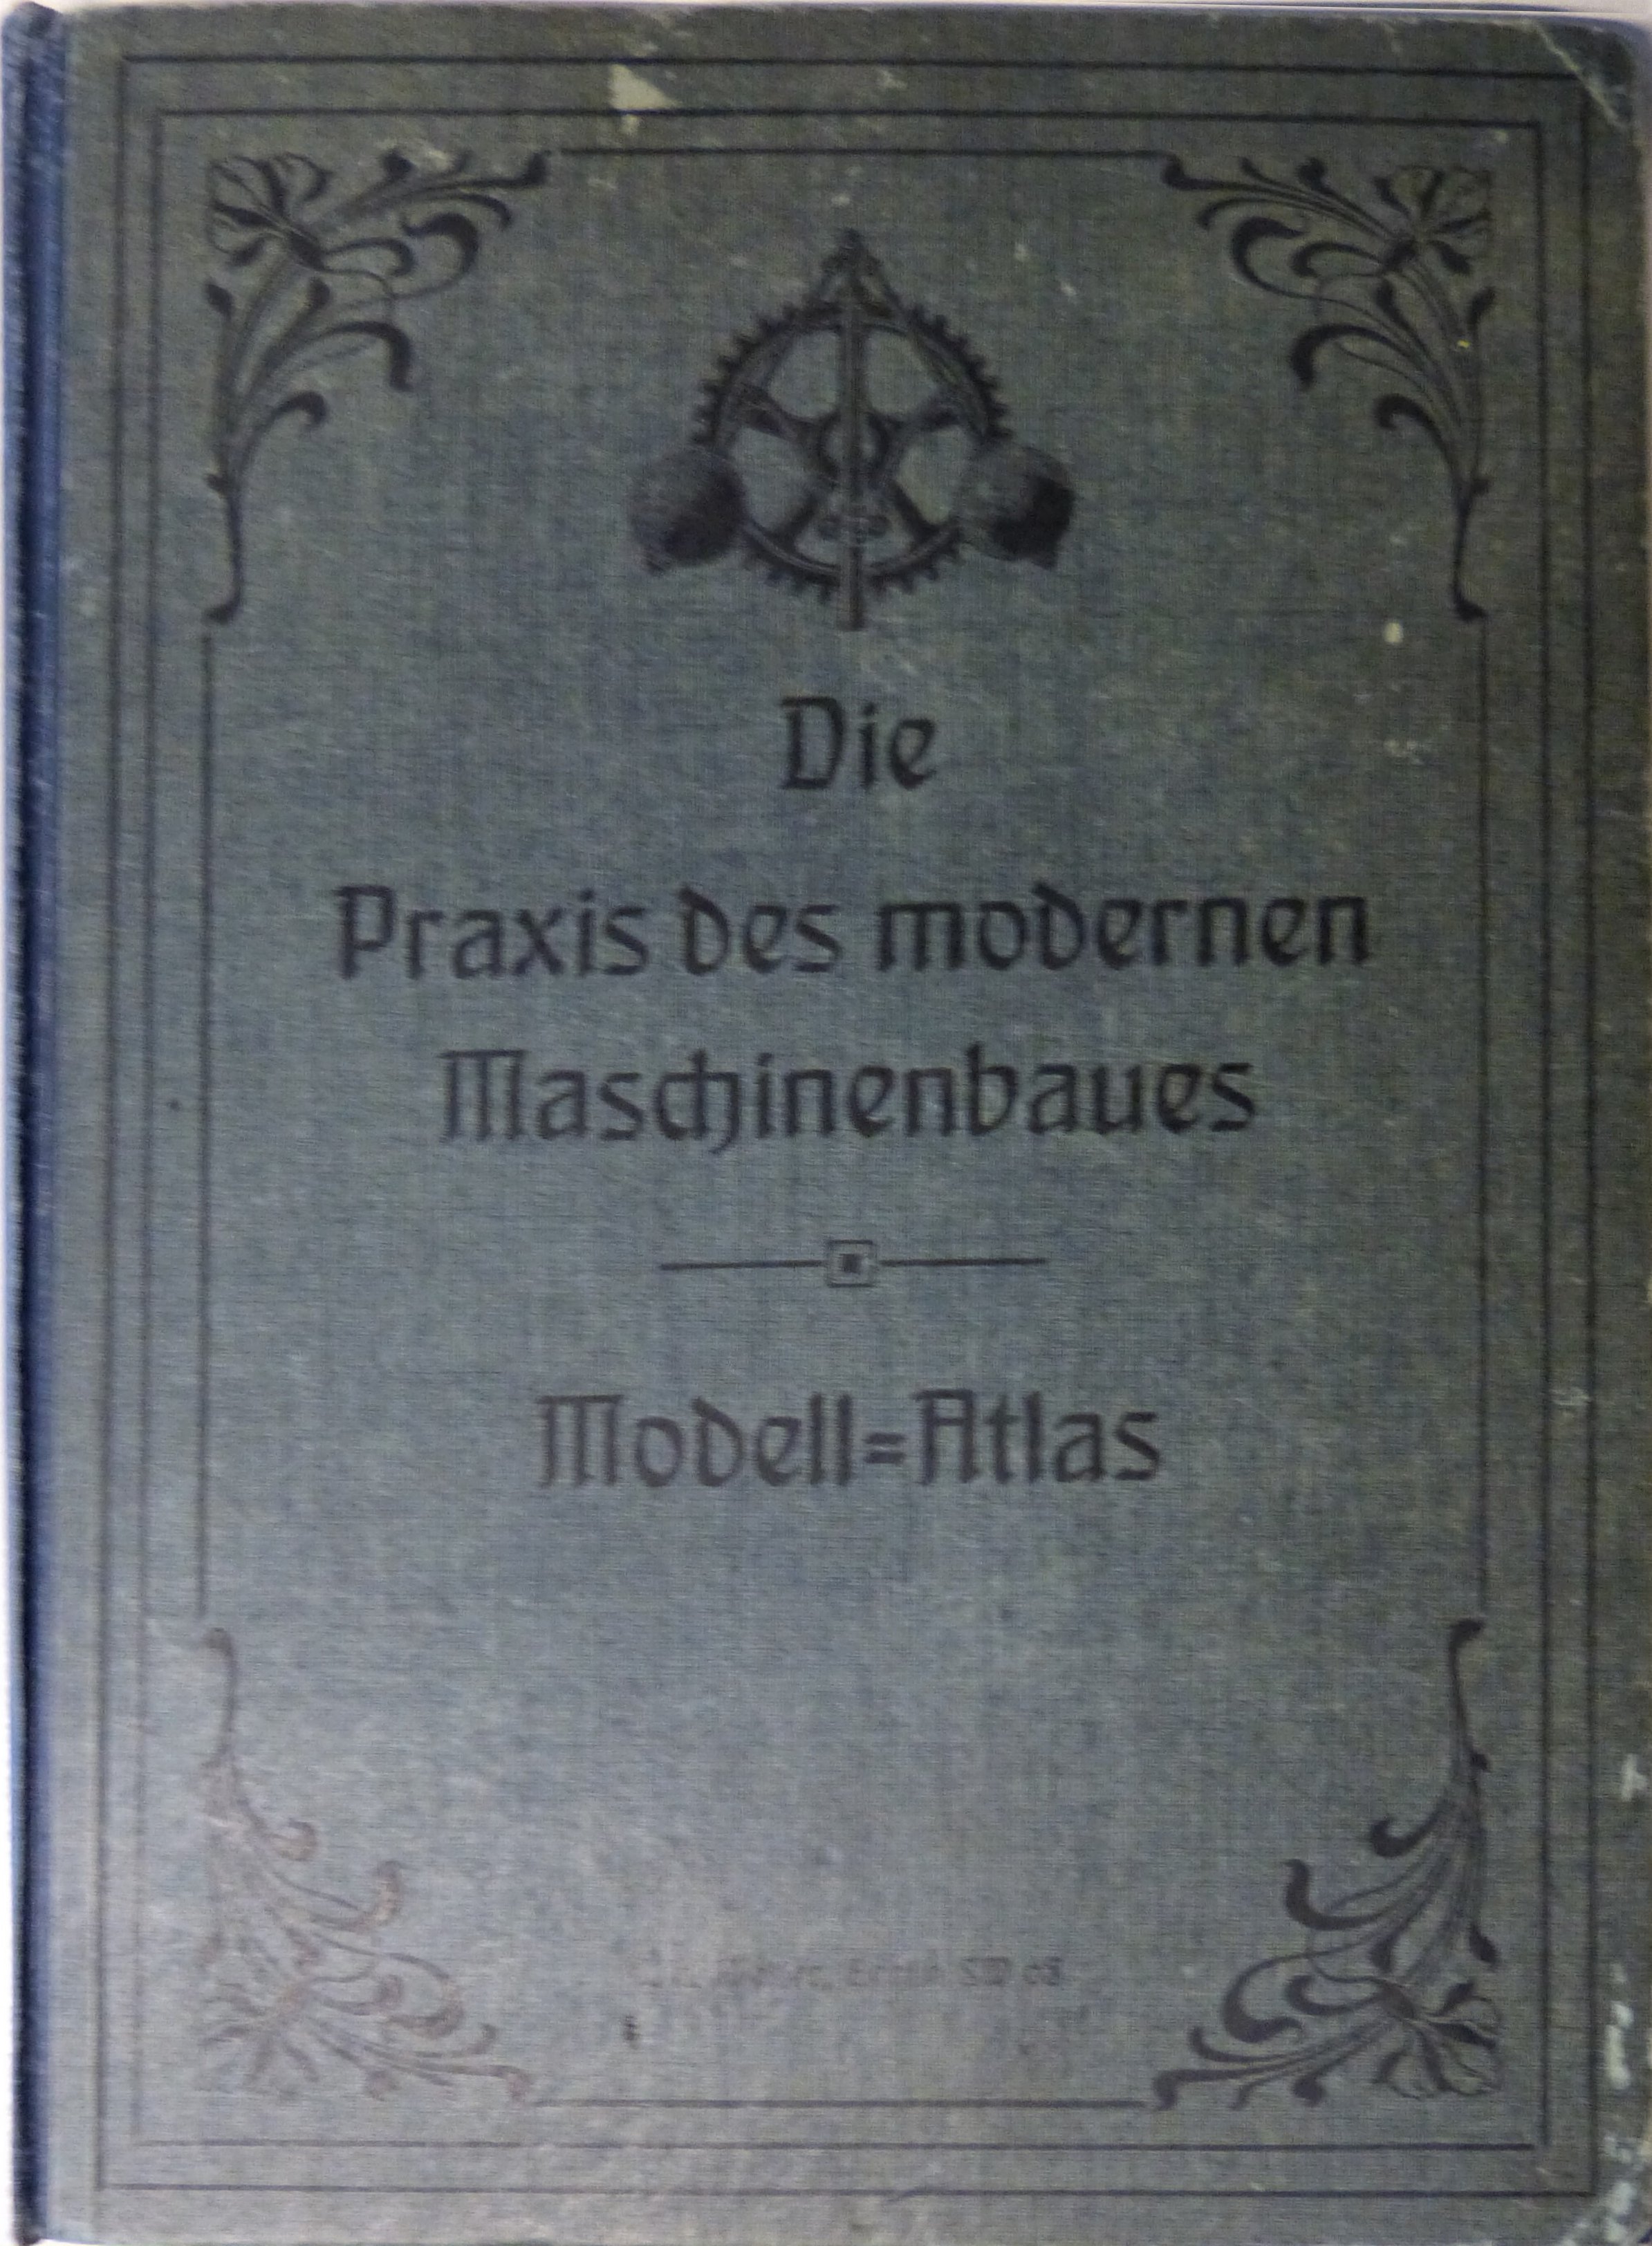 Modell-Atlas "Die Praxis des modernen Maschinenbaues" (Städt. Hellweg-Museum Geseke CC BY-NC-SA)